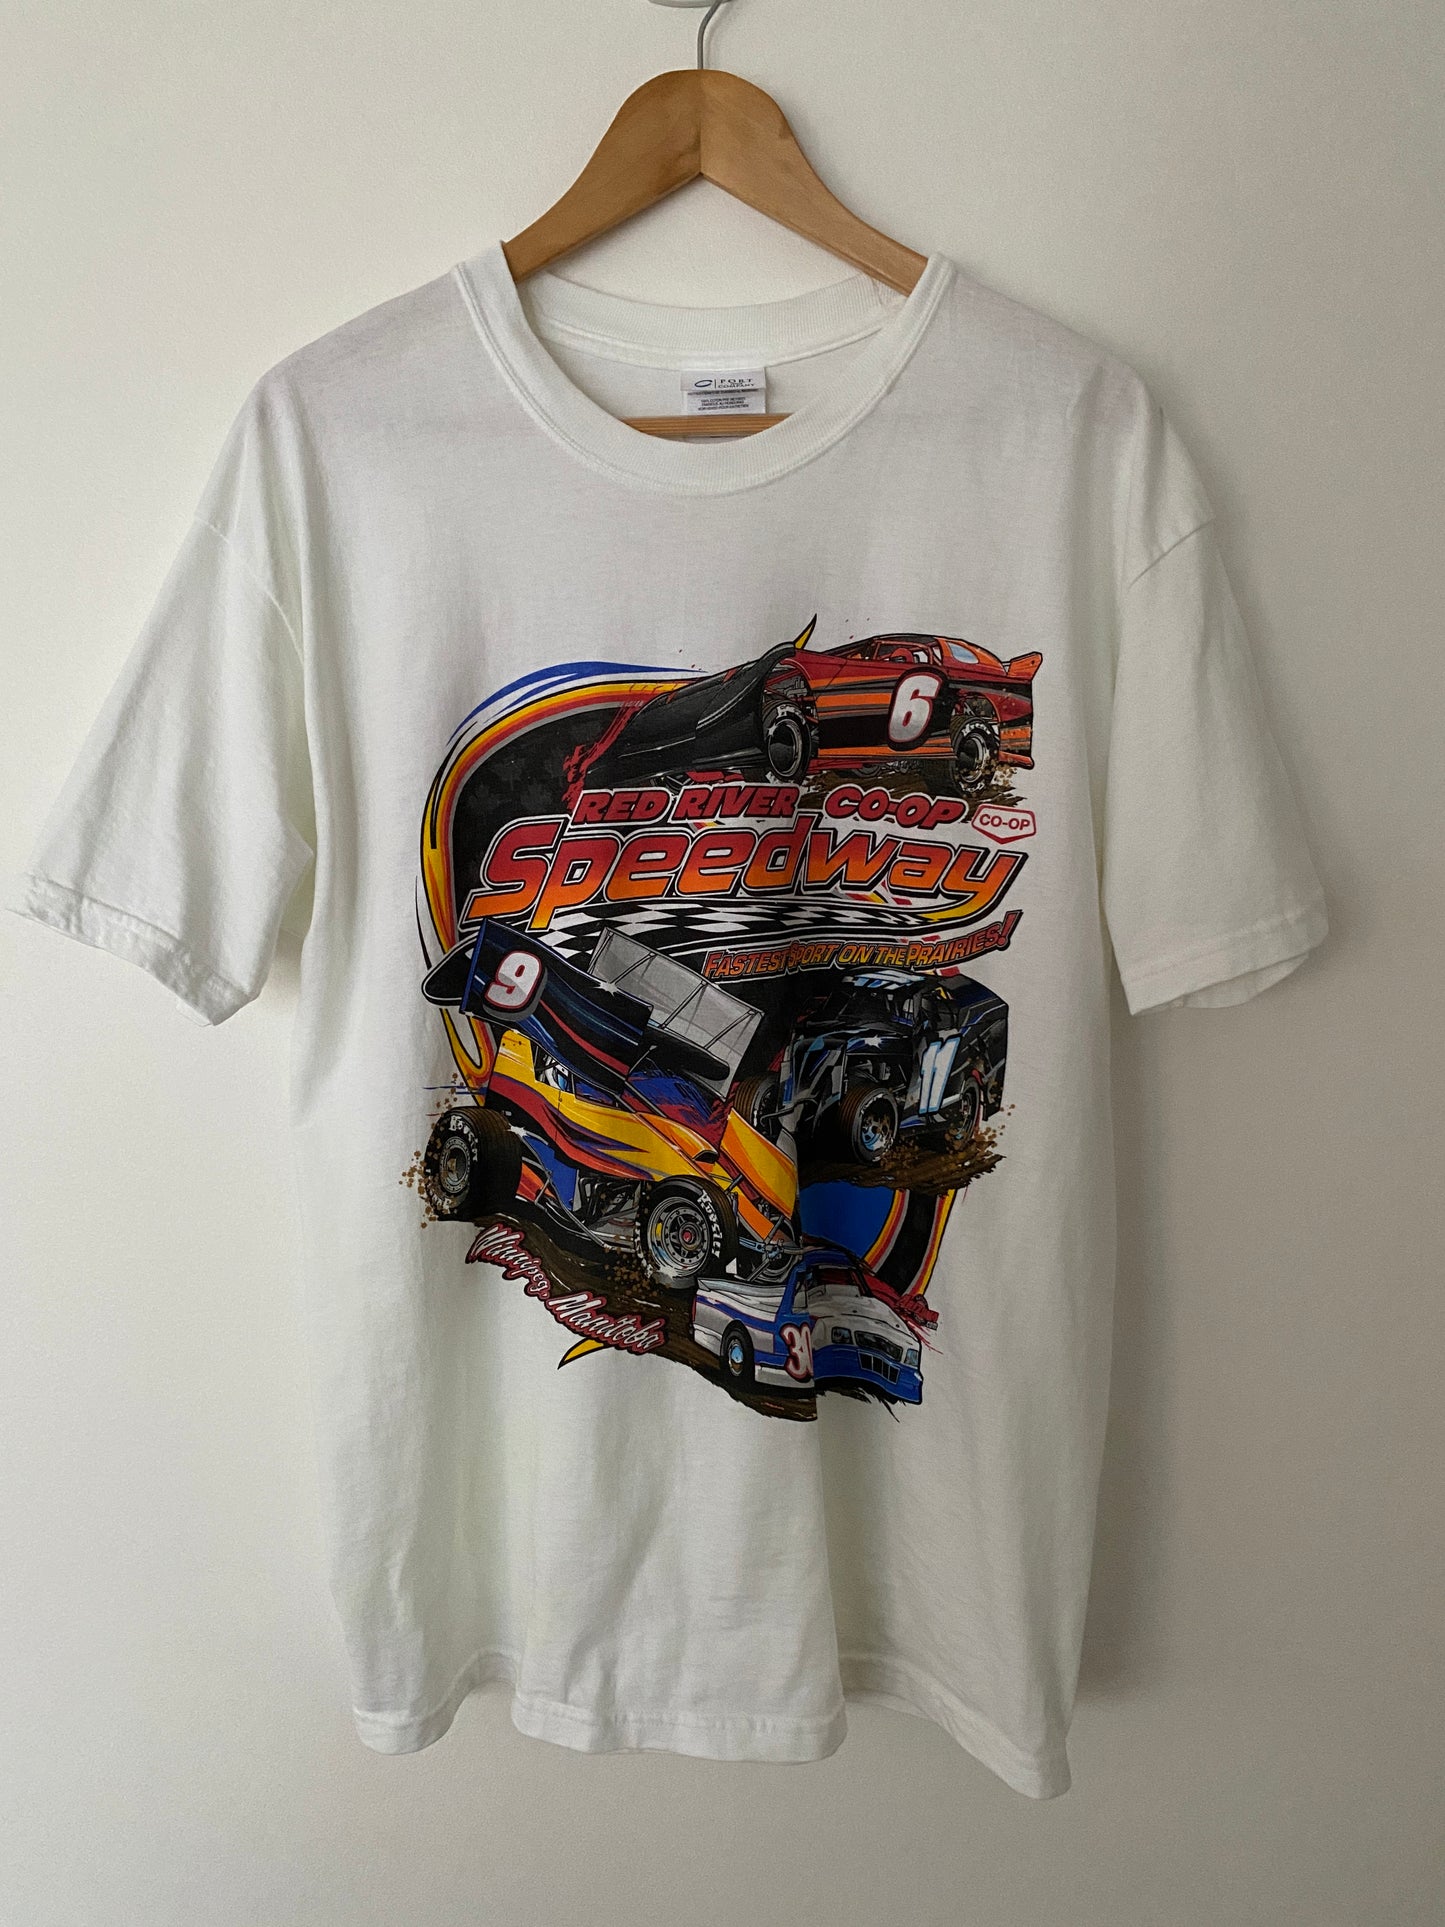 Red River Co-Op Speedway T-Shirt - L